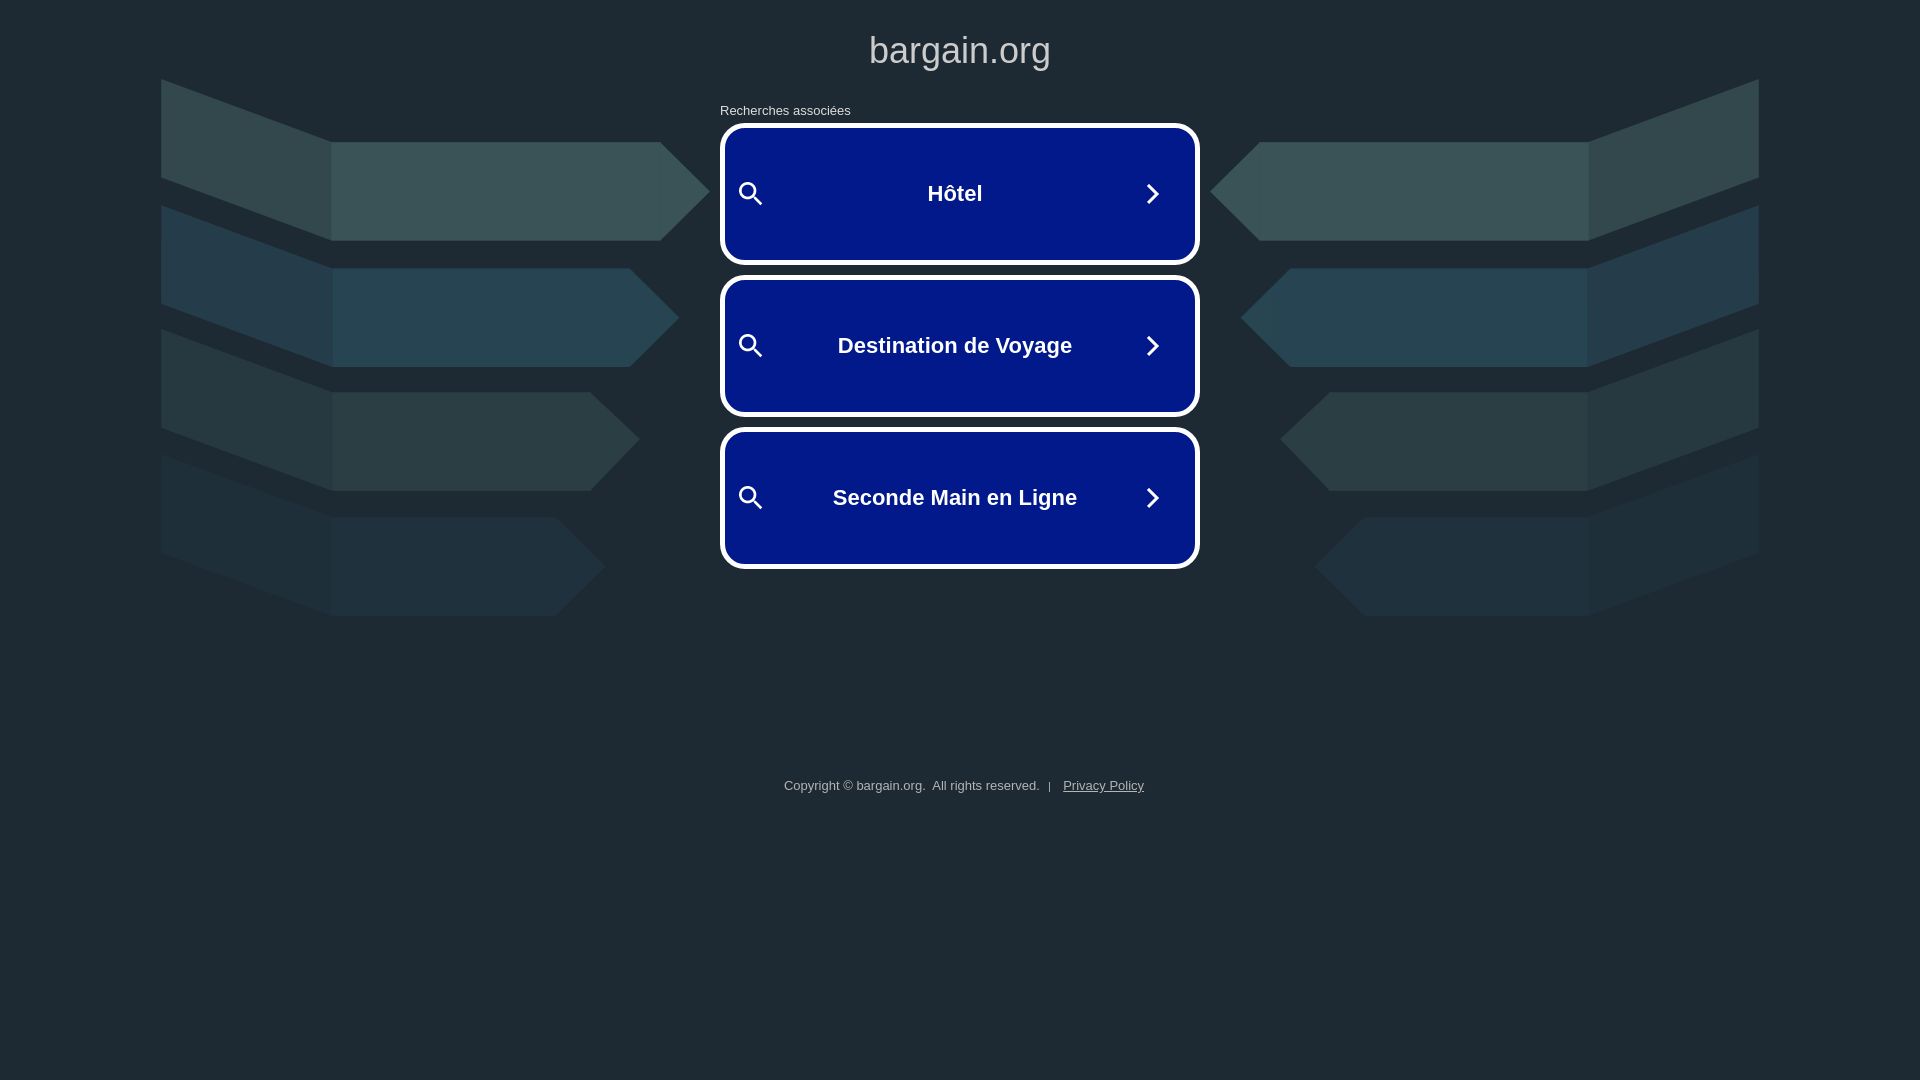 Status do site bargain.org está   ONLINE